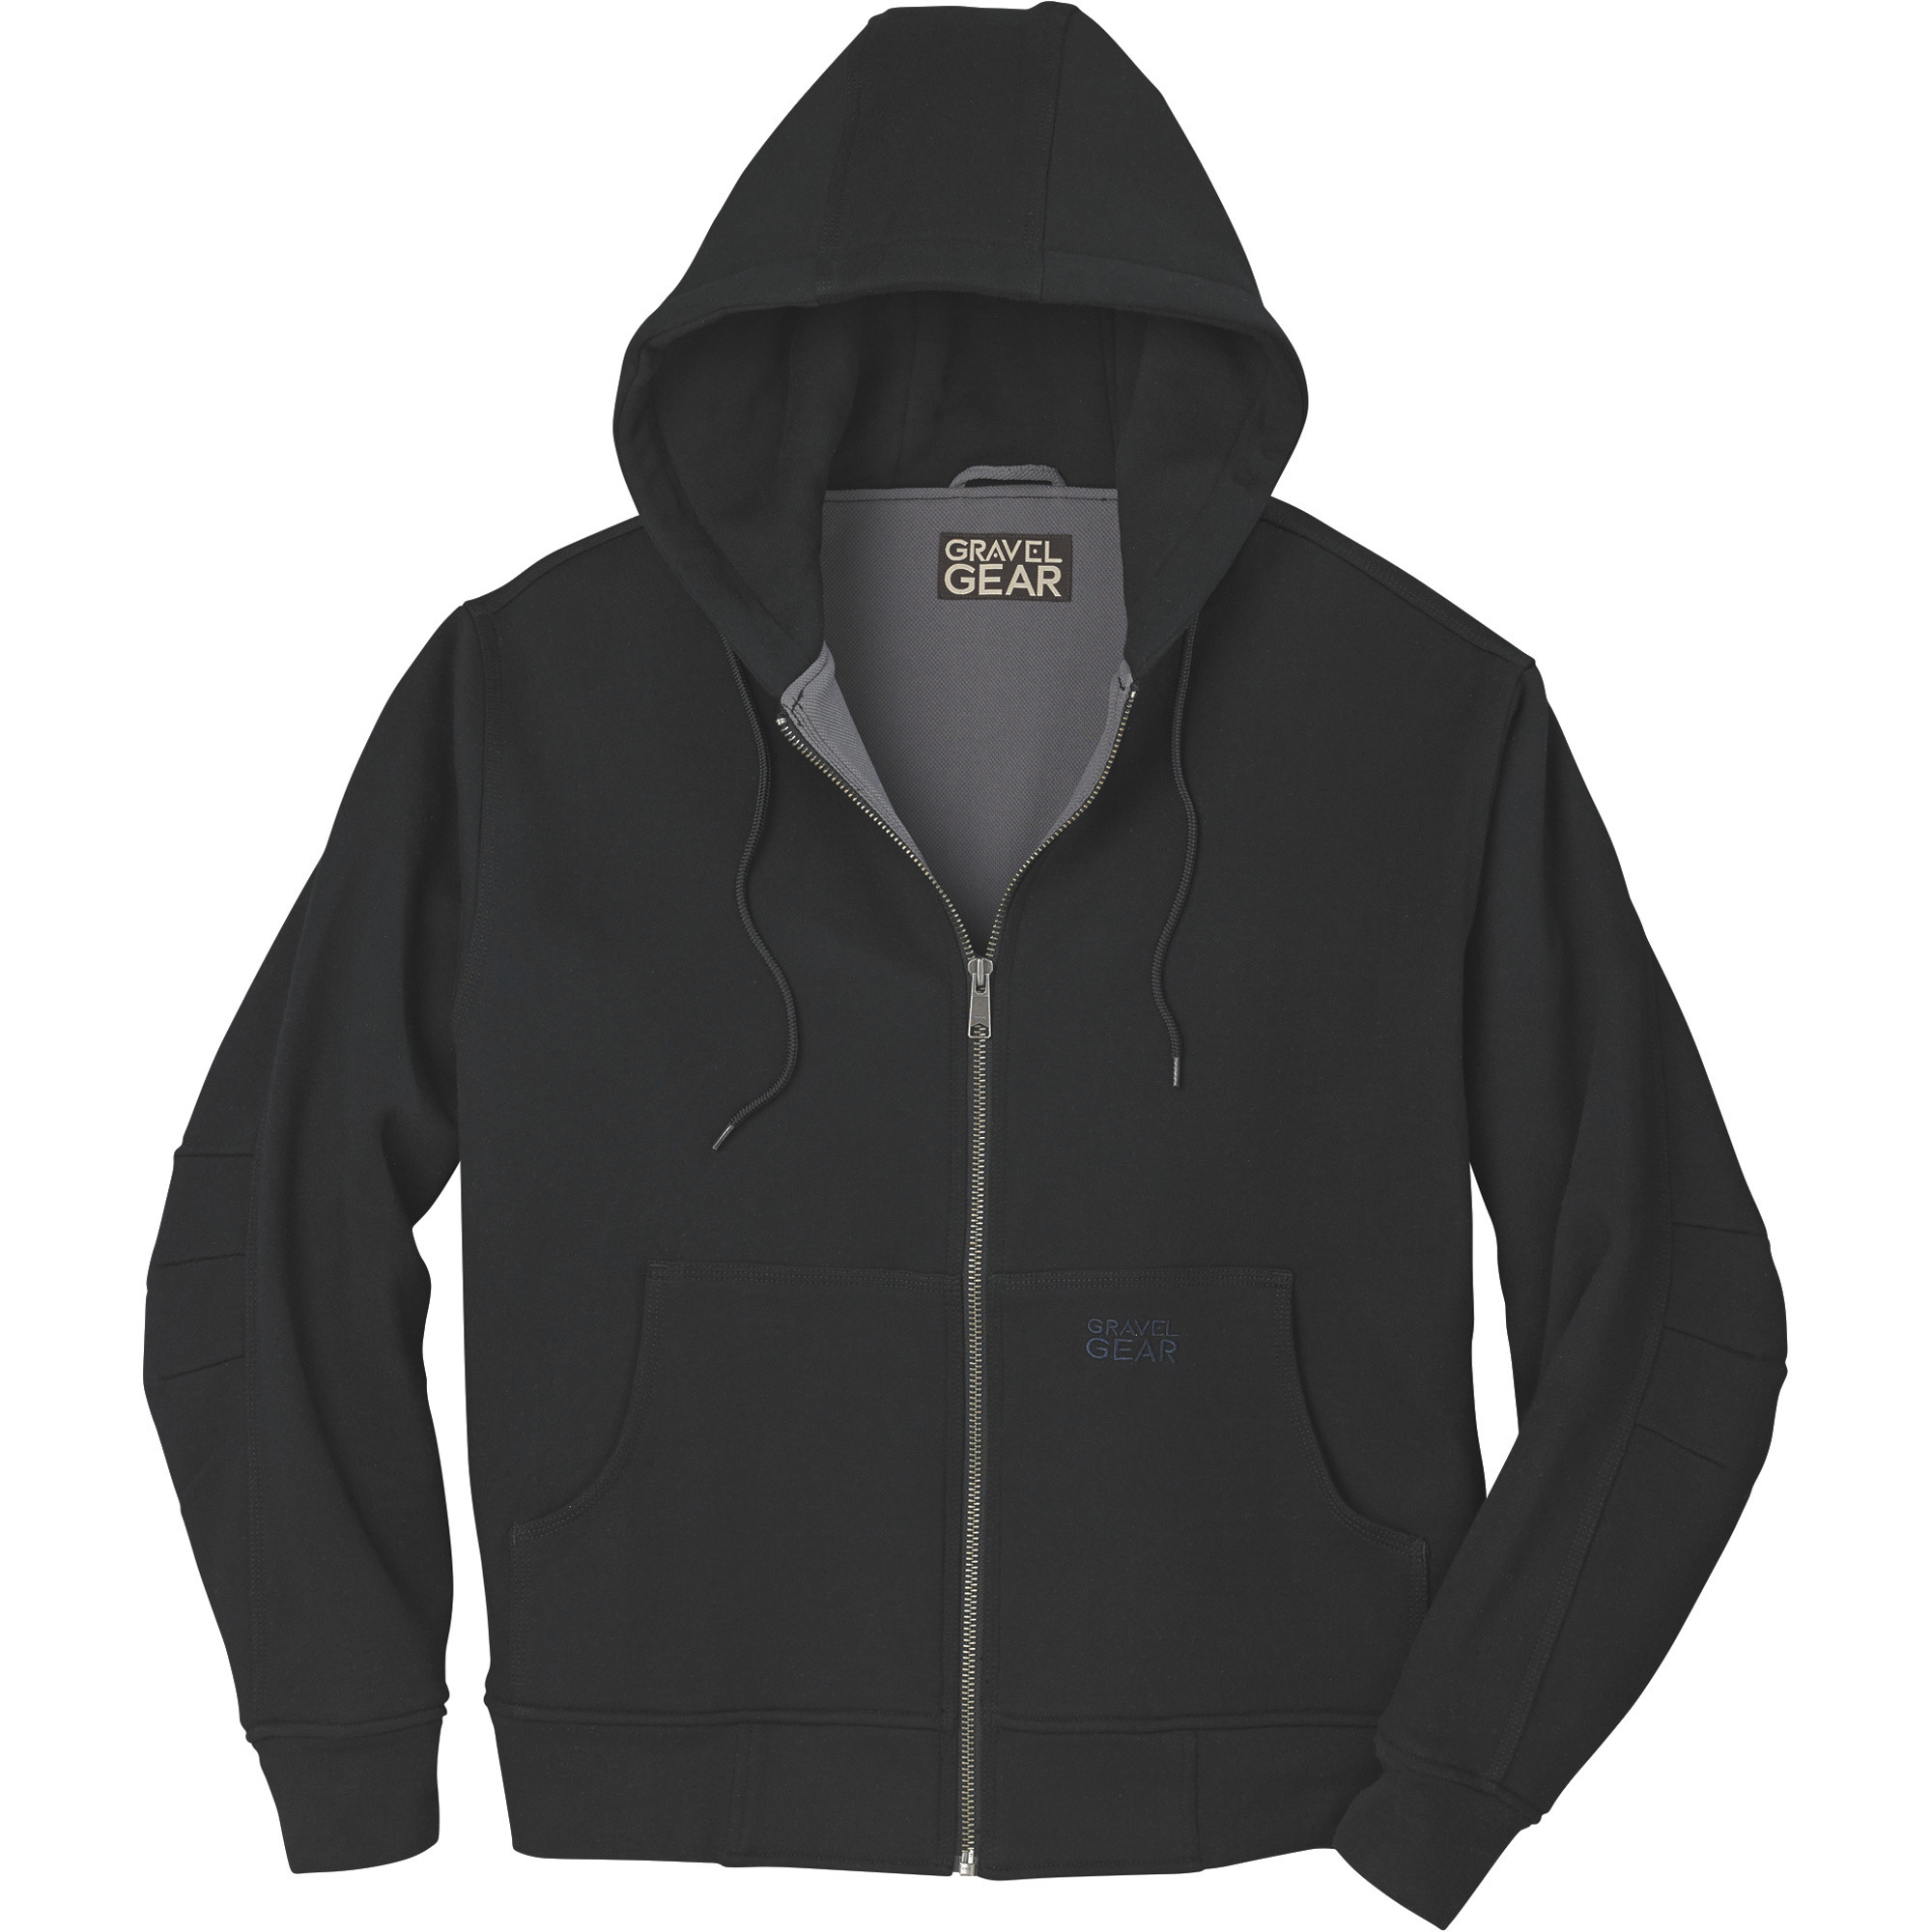 Gravel Gear Men's Hooded Thermal-Lined Sweatshirt - Black, Medium